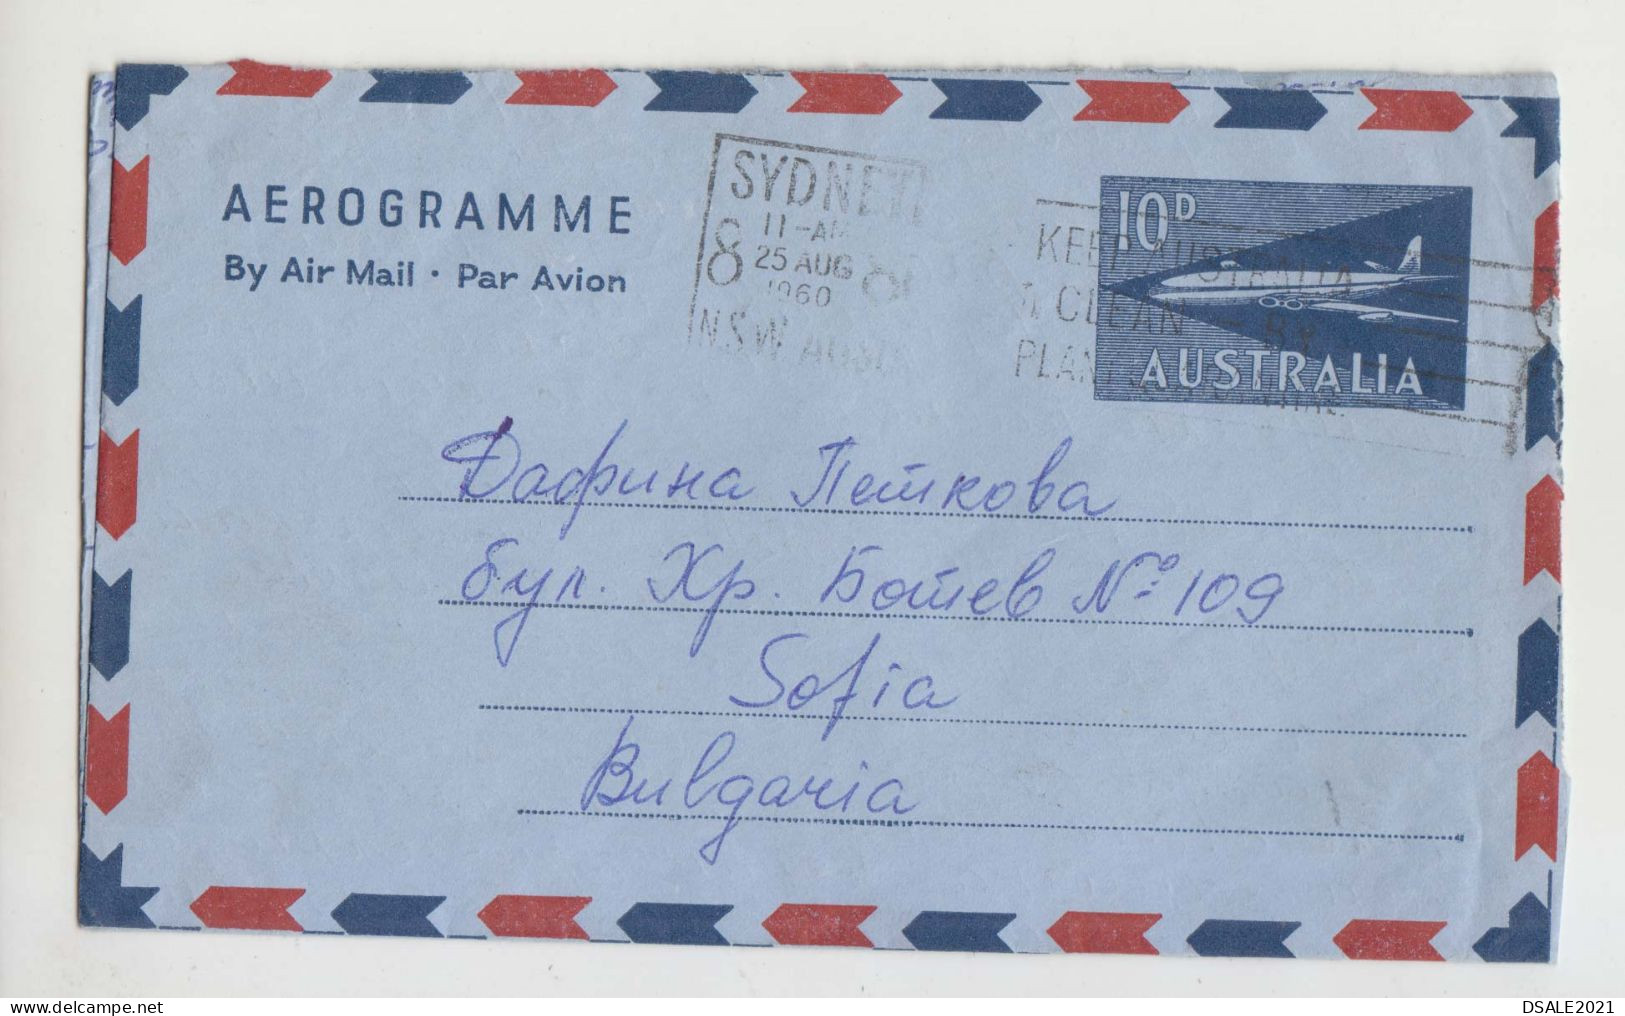 Australia Australien Australie 1960 Airmail Stationery Entier Aerogramme Aerogram (10d) Topic-Airplane To Bulgaria Ds938 - Aérogrammes